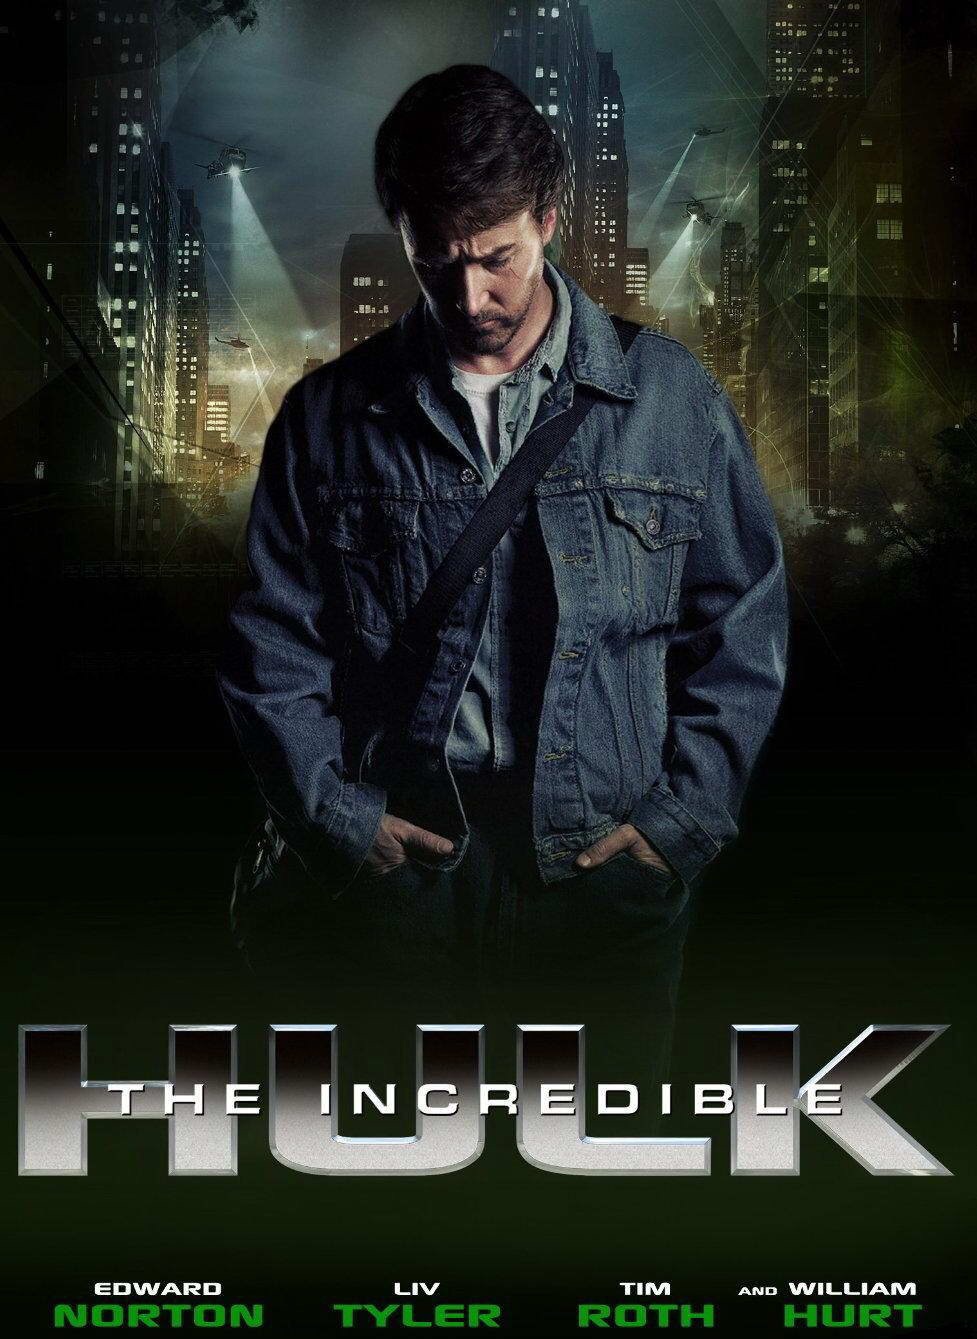 Tranvía T grado The Incredible Hulk (2008) | Jim Erwin